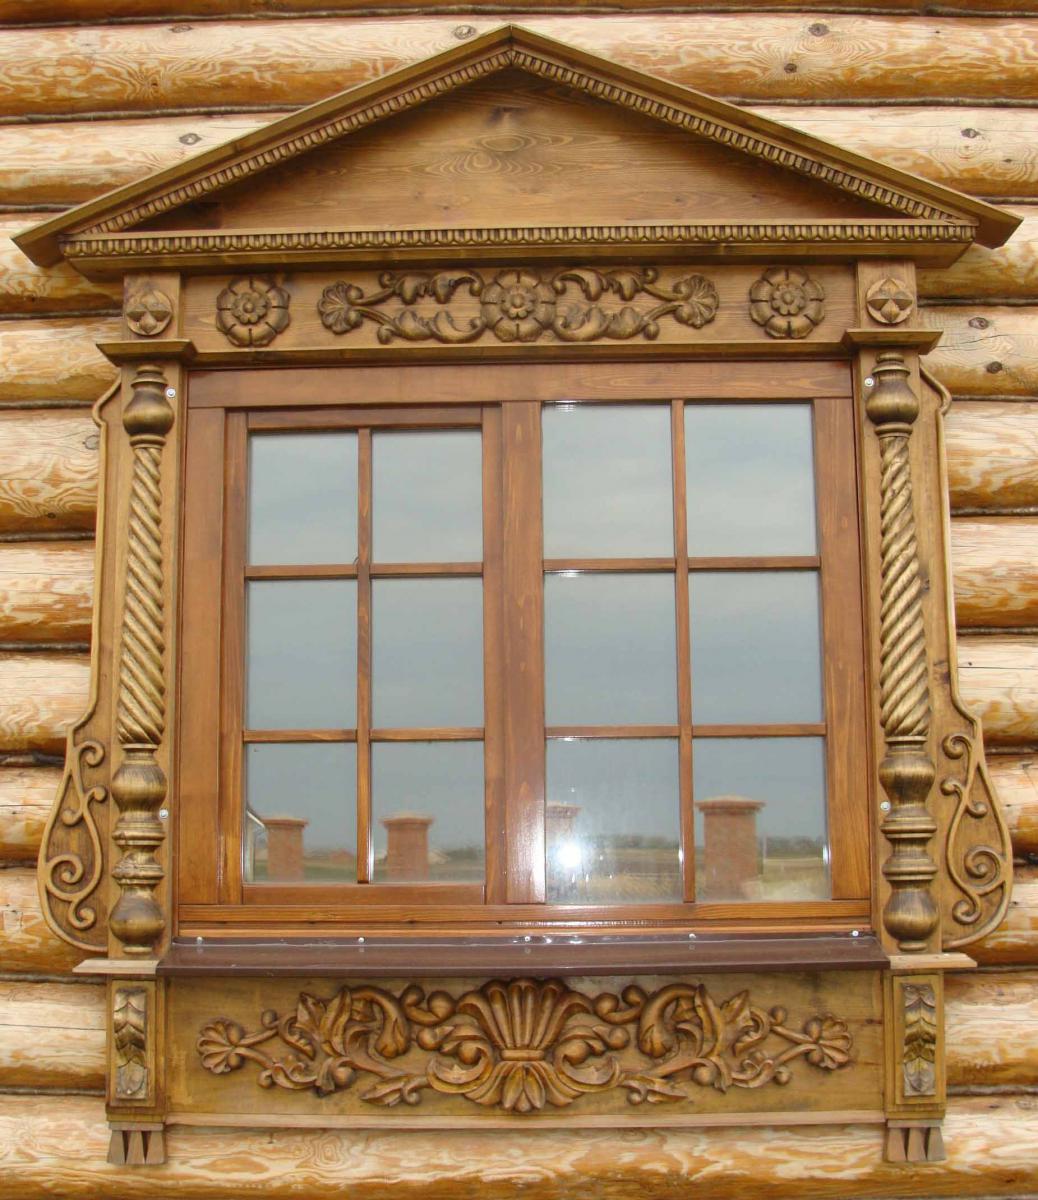 Декоративная резьба вокруг окна